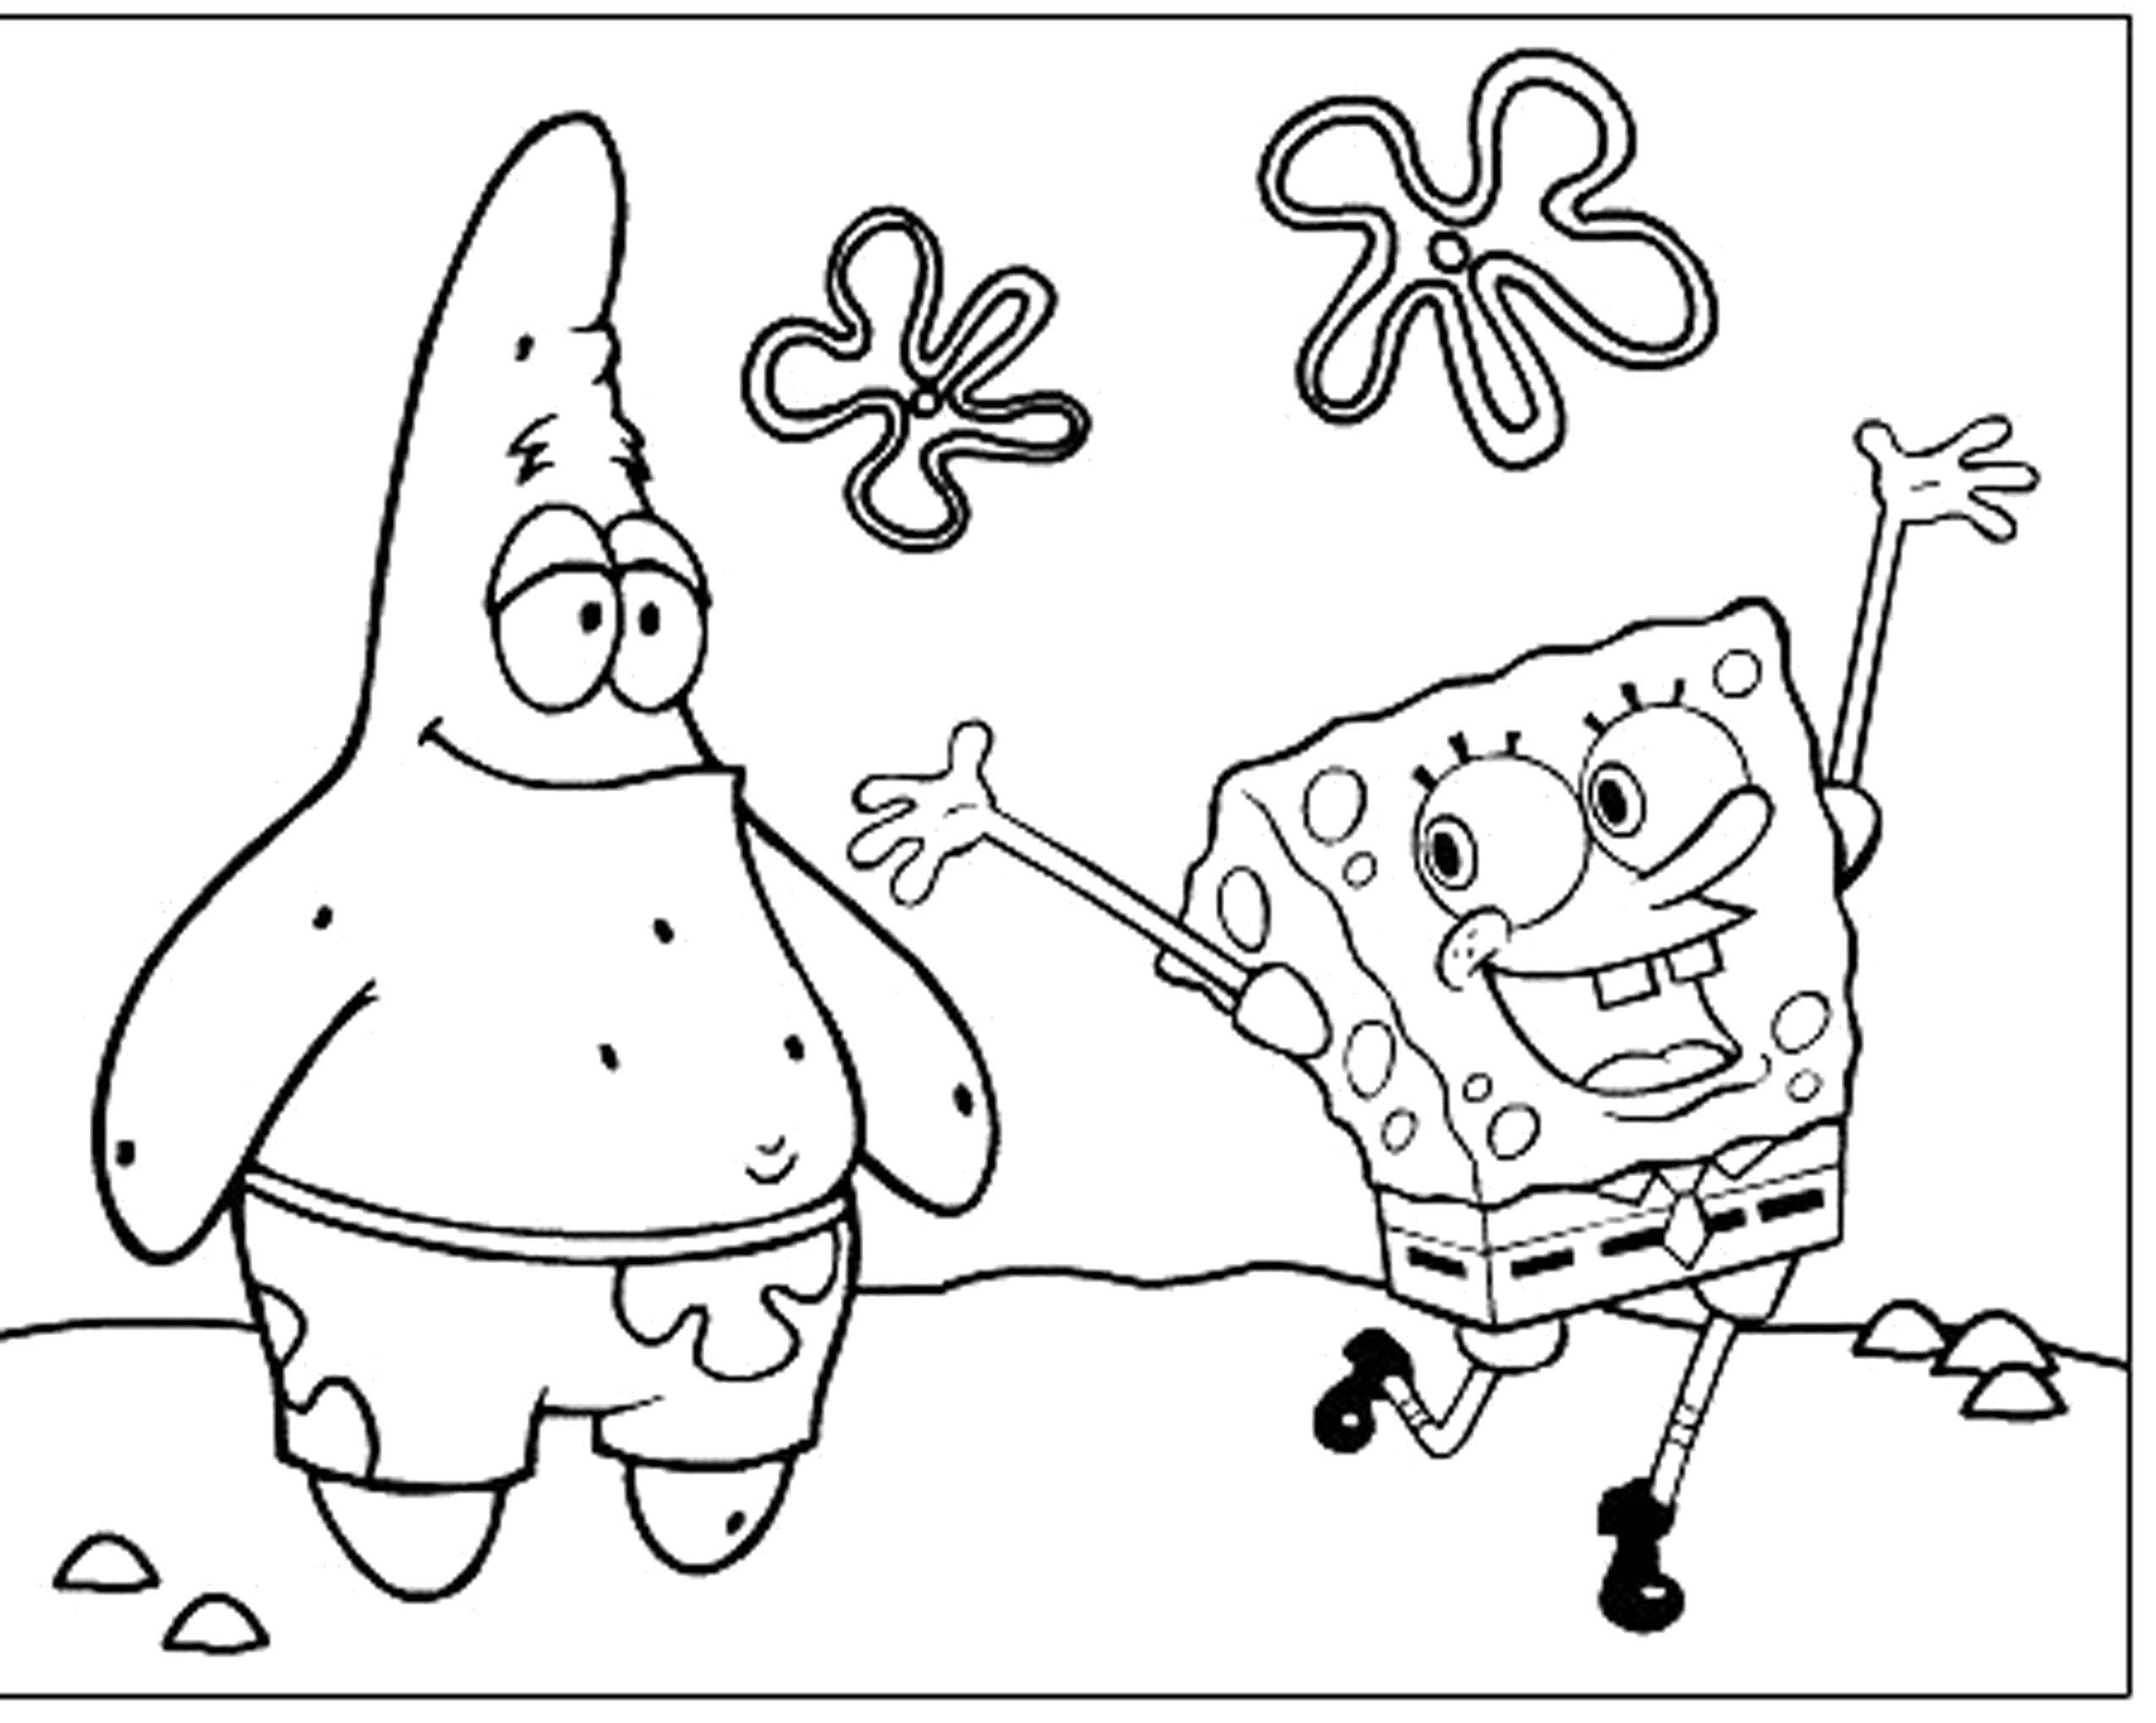 Coloring Sponge Bob square pants and Patrick.. Category Spongebob. Tags:  Cartoon character, spongebob, spongebob, Patrick.